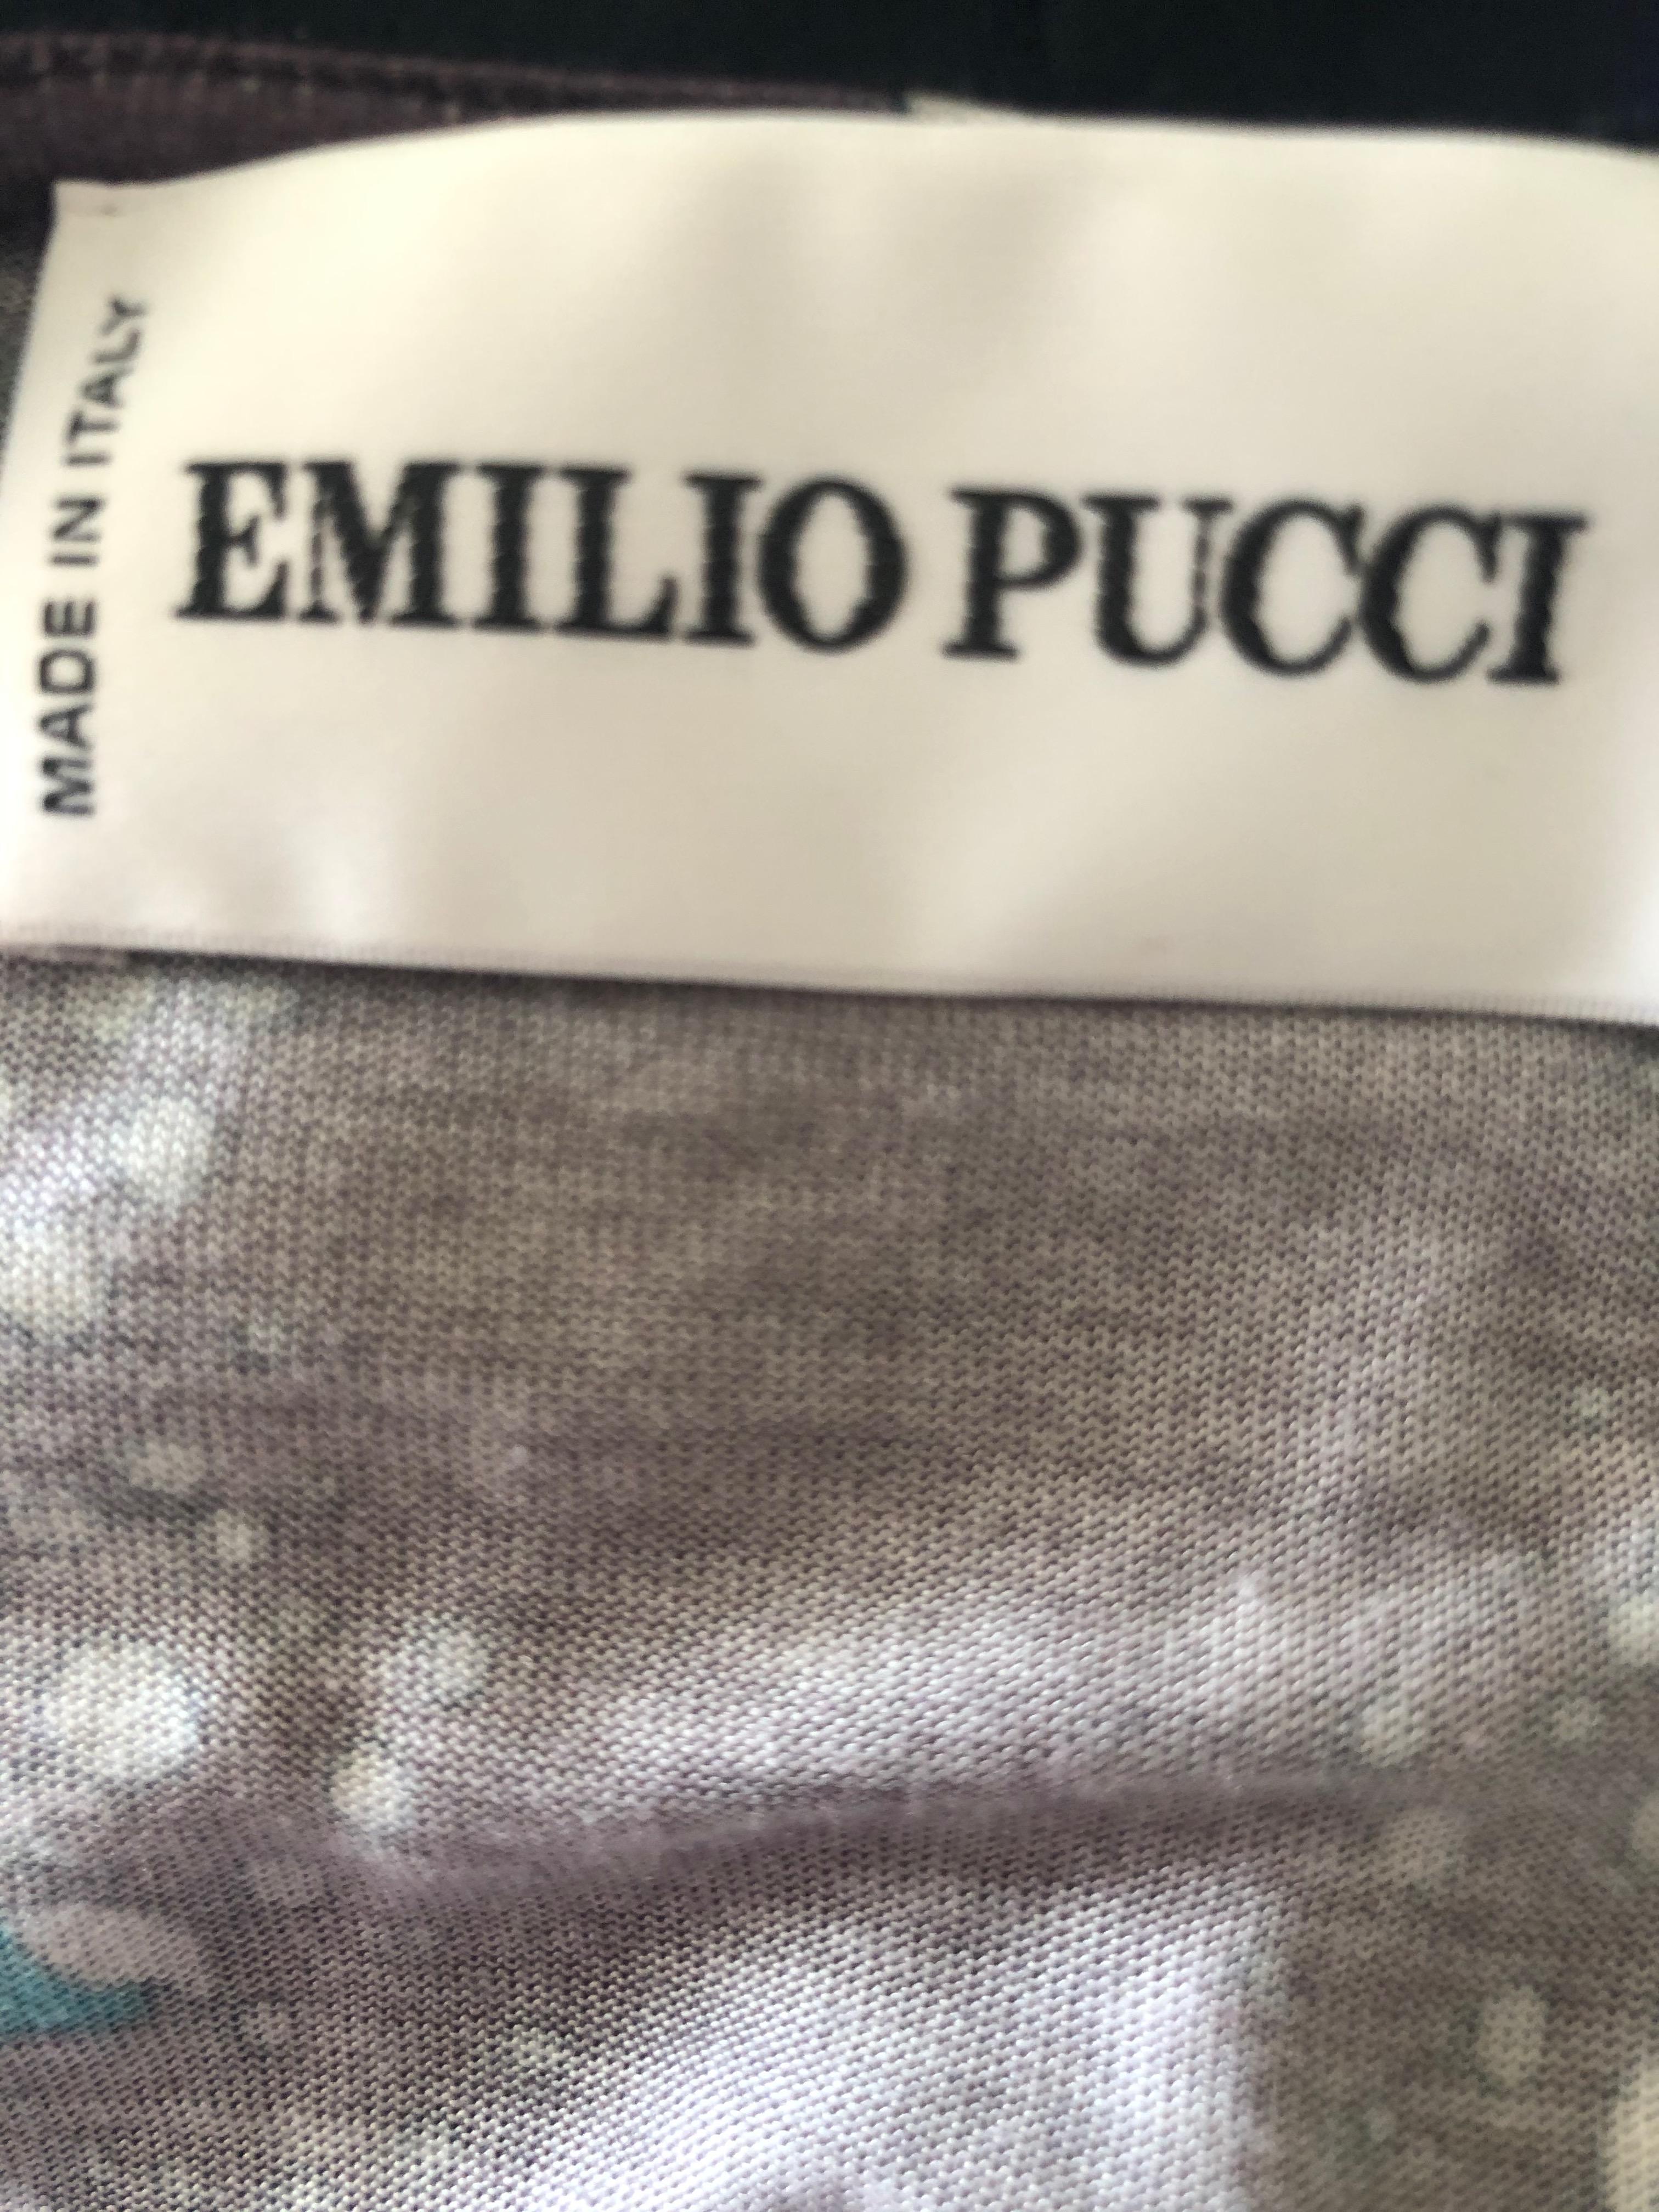 Emilio Pucci Low Cut Evening Dress with Lace Trim For Sale 4